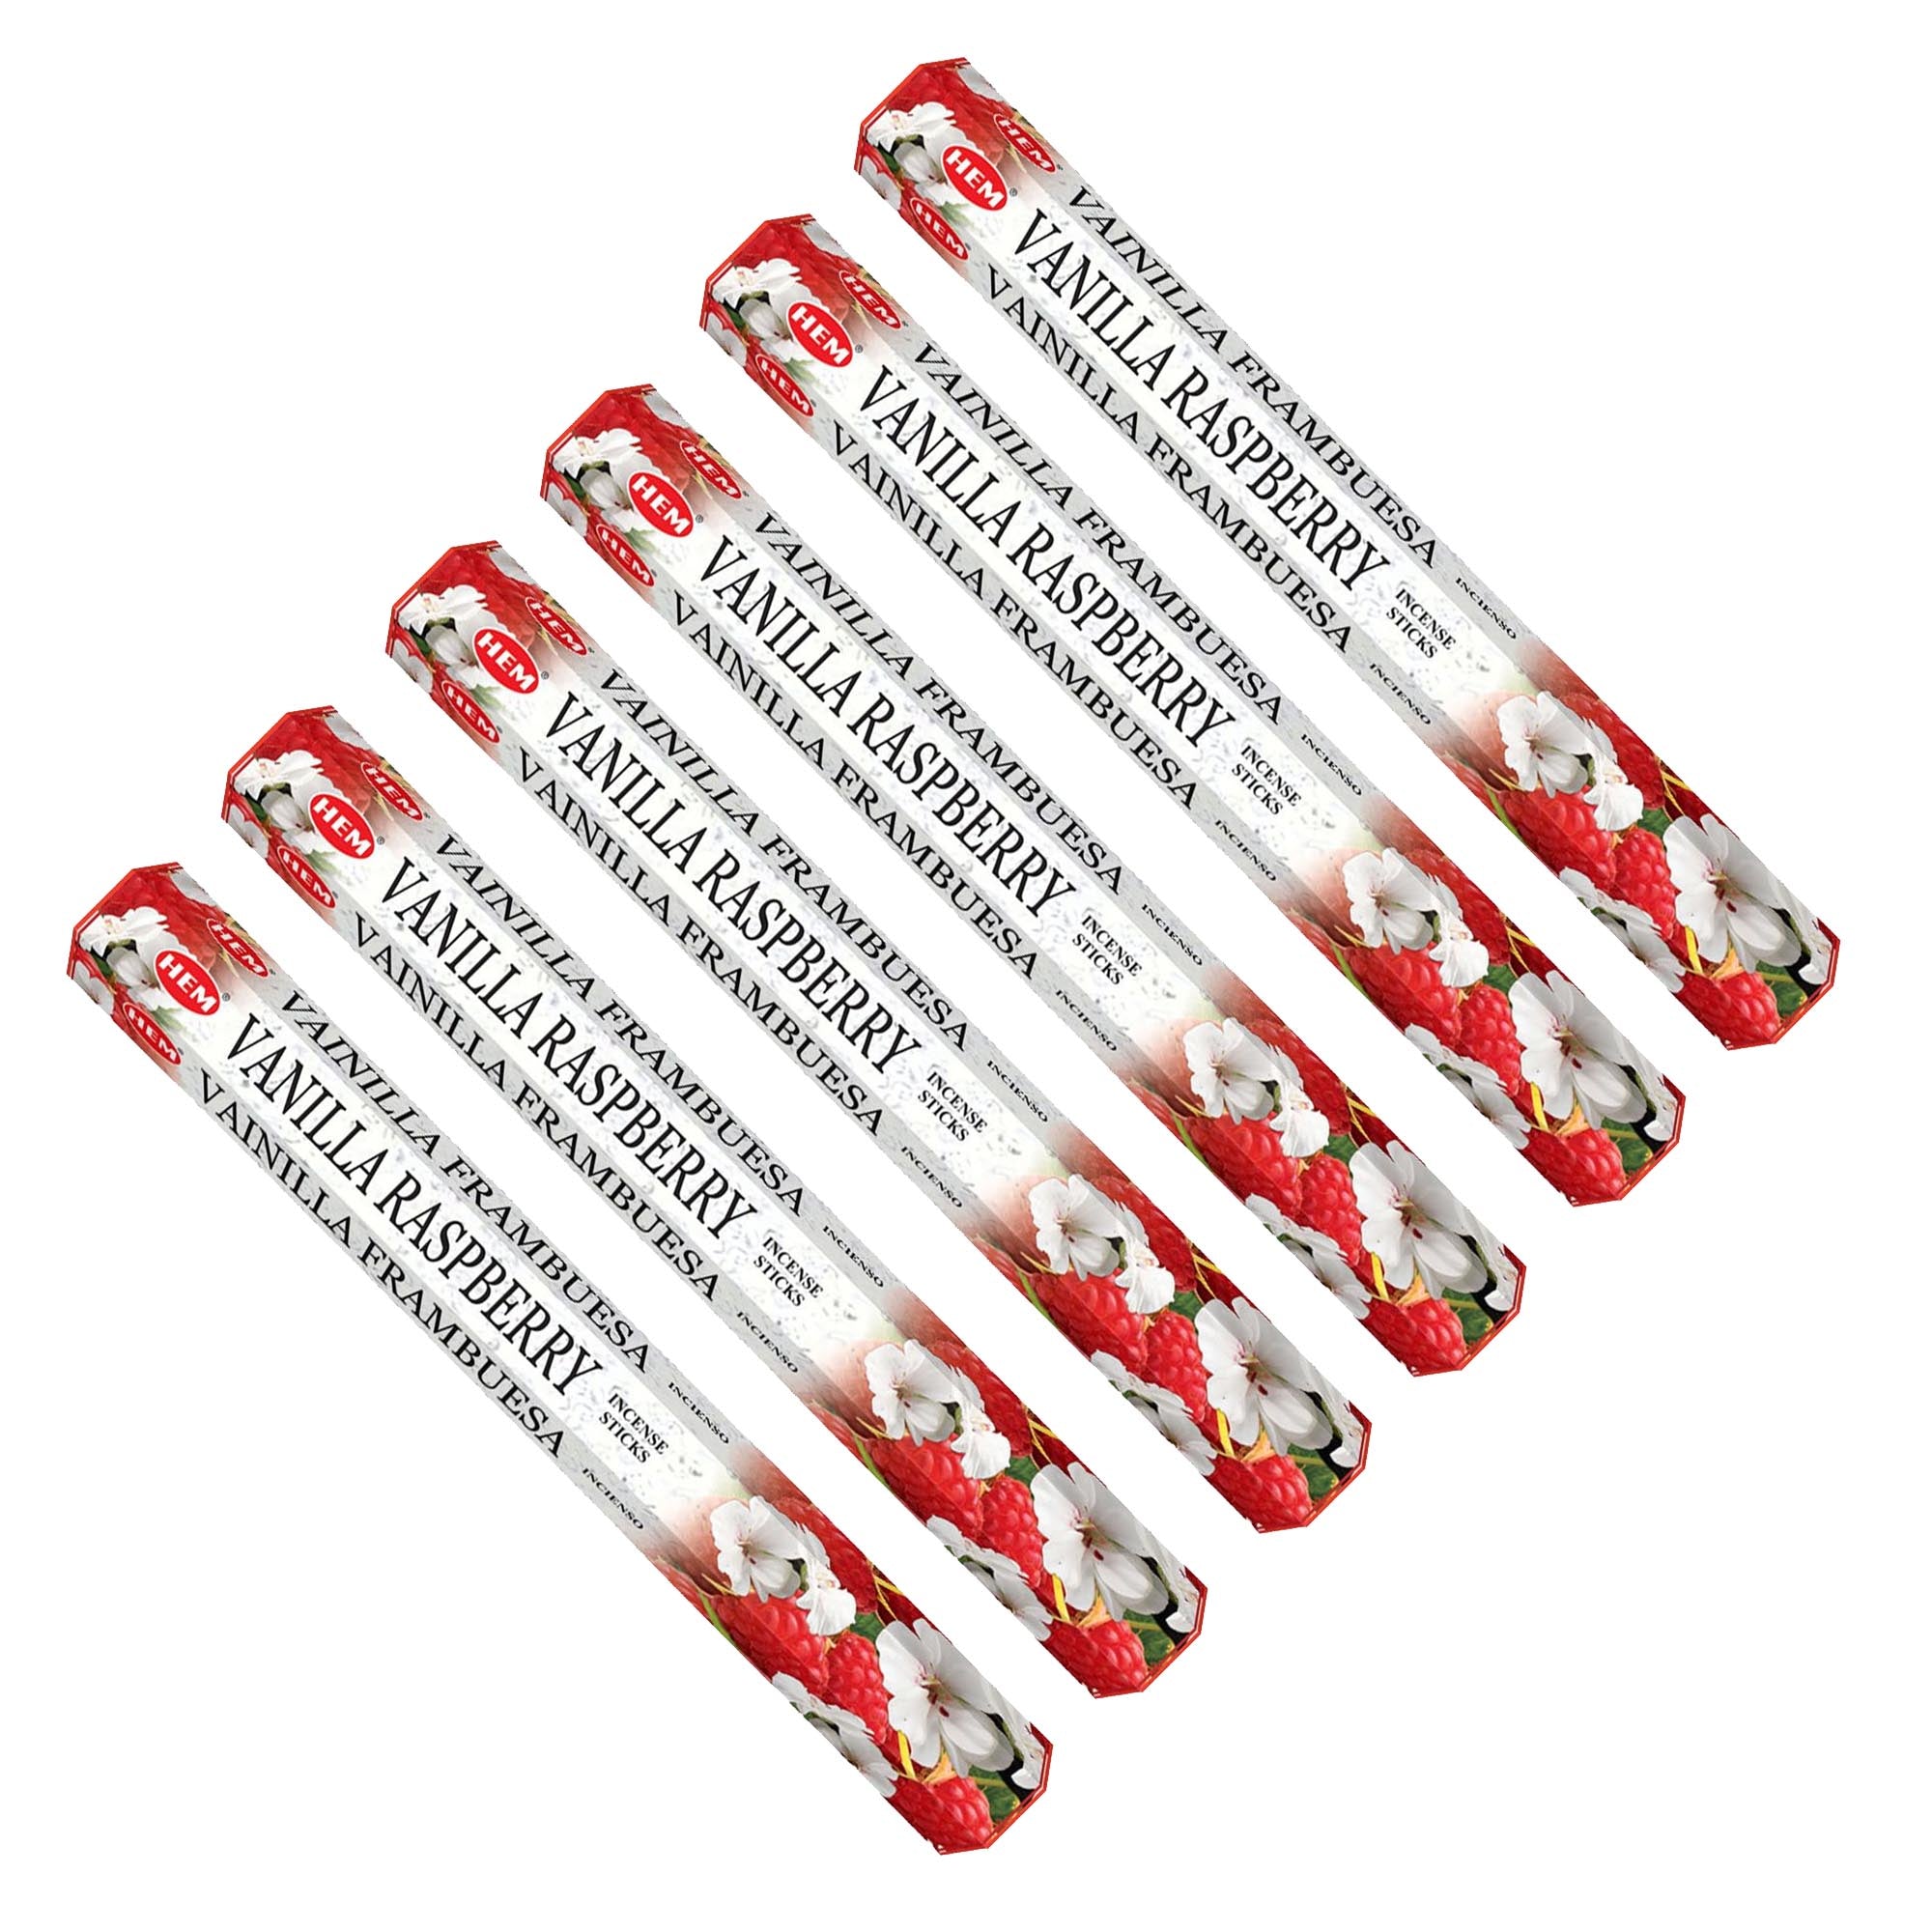 HEM - Hexagon - Vanilla Raspberry Incense Sticks